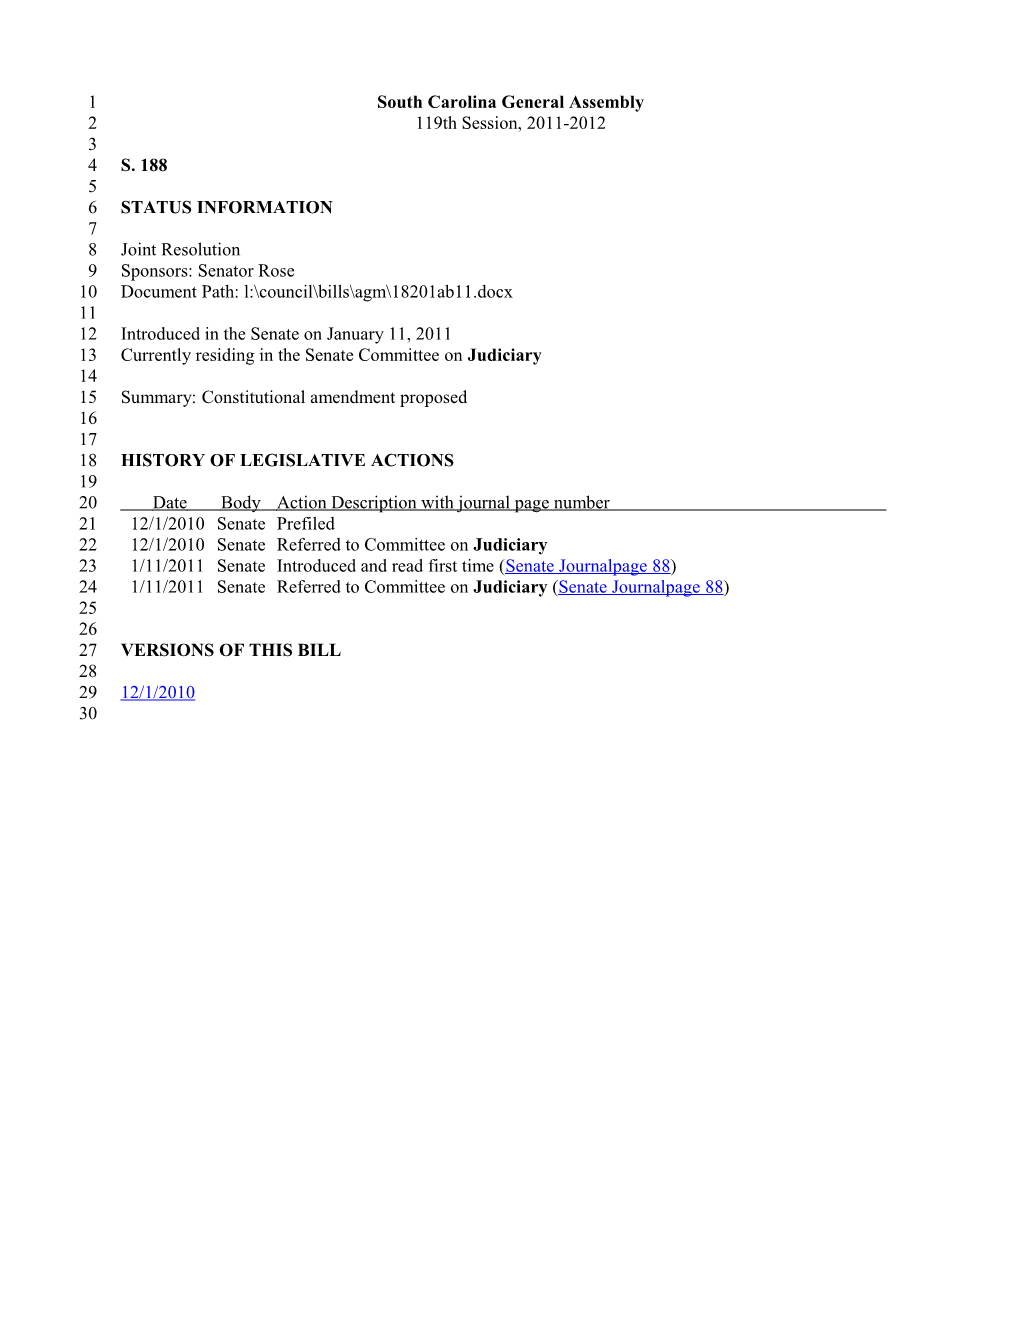 2011-2012 Bill 188: Constitutional Amendment Proposed - South Carolina Legislature Online